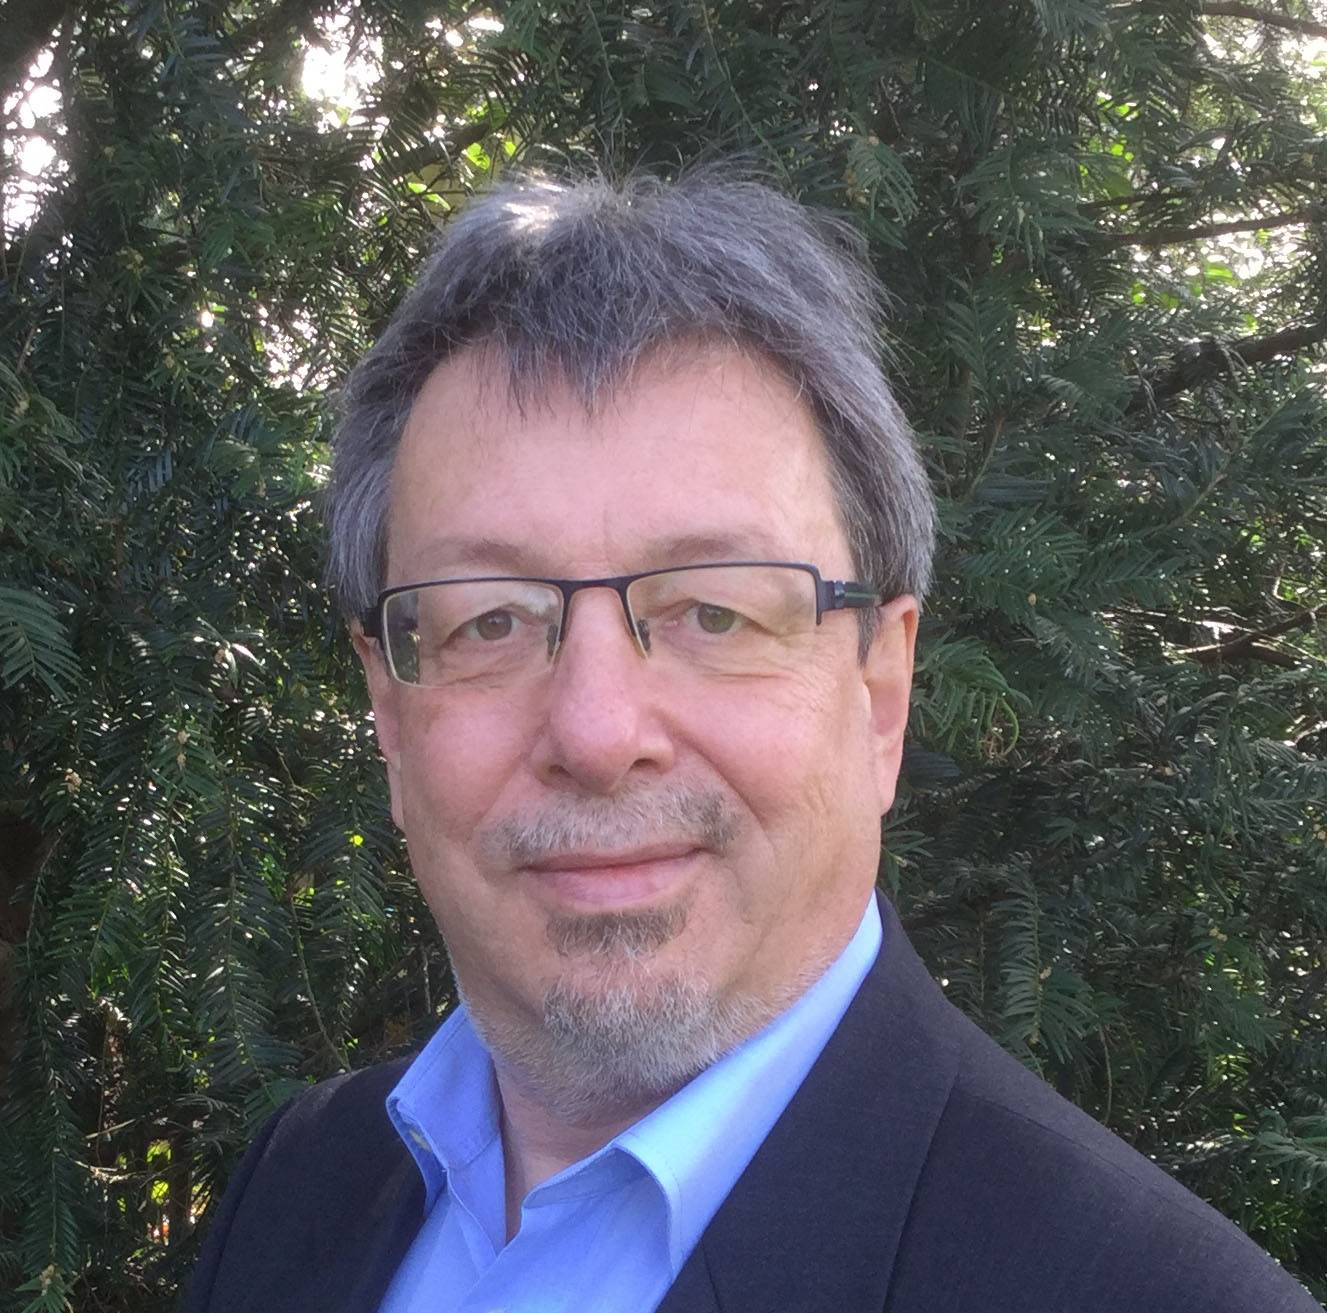 Grüne nominieren Peter Knitsch als Bürgermeisterkandidat